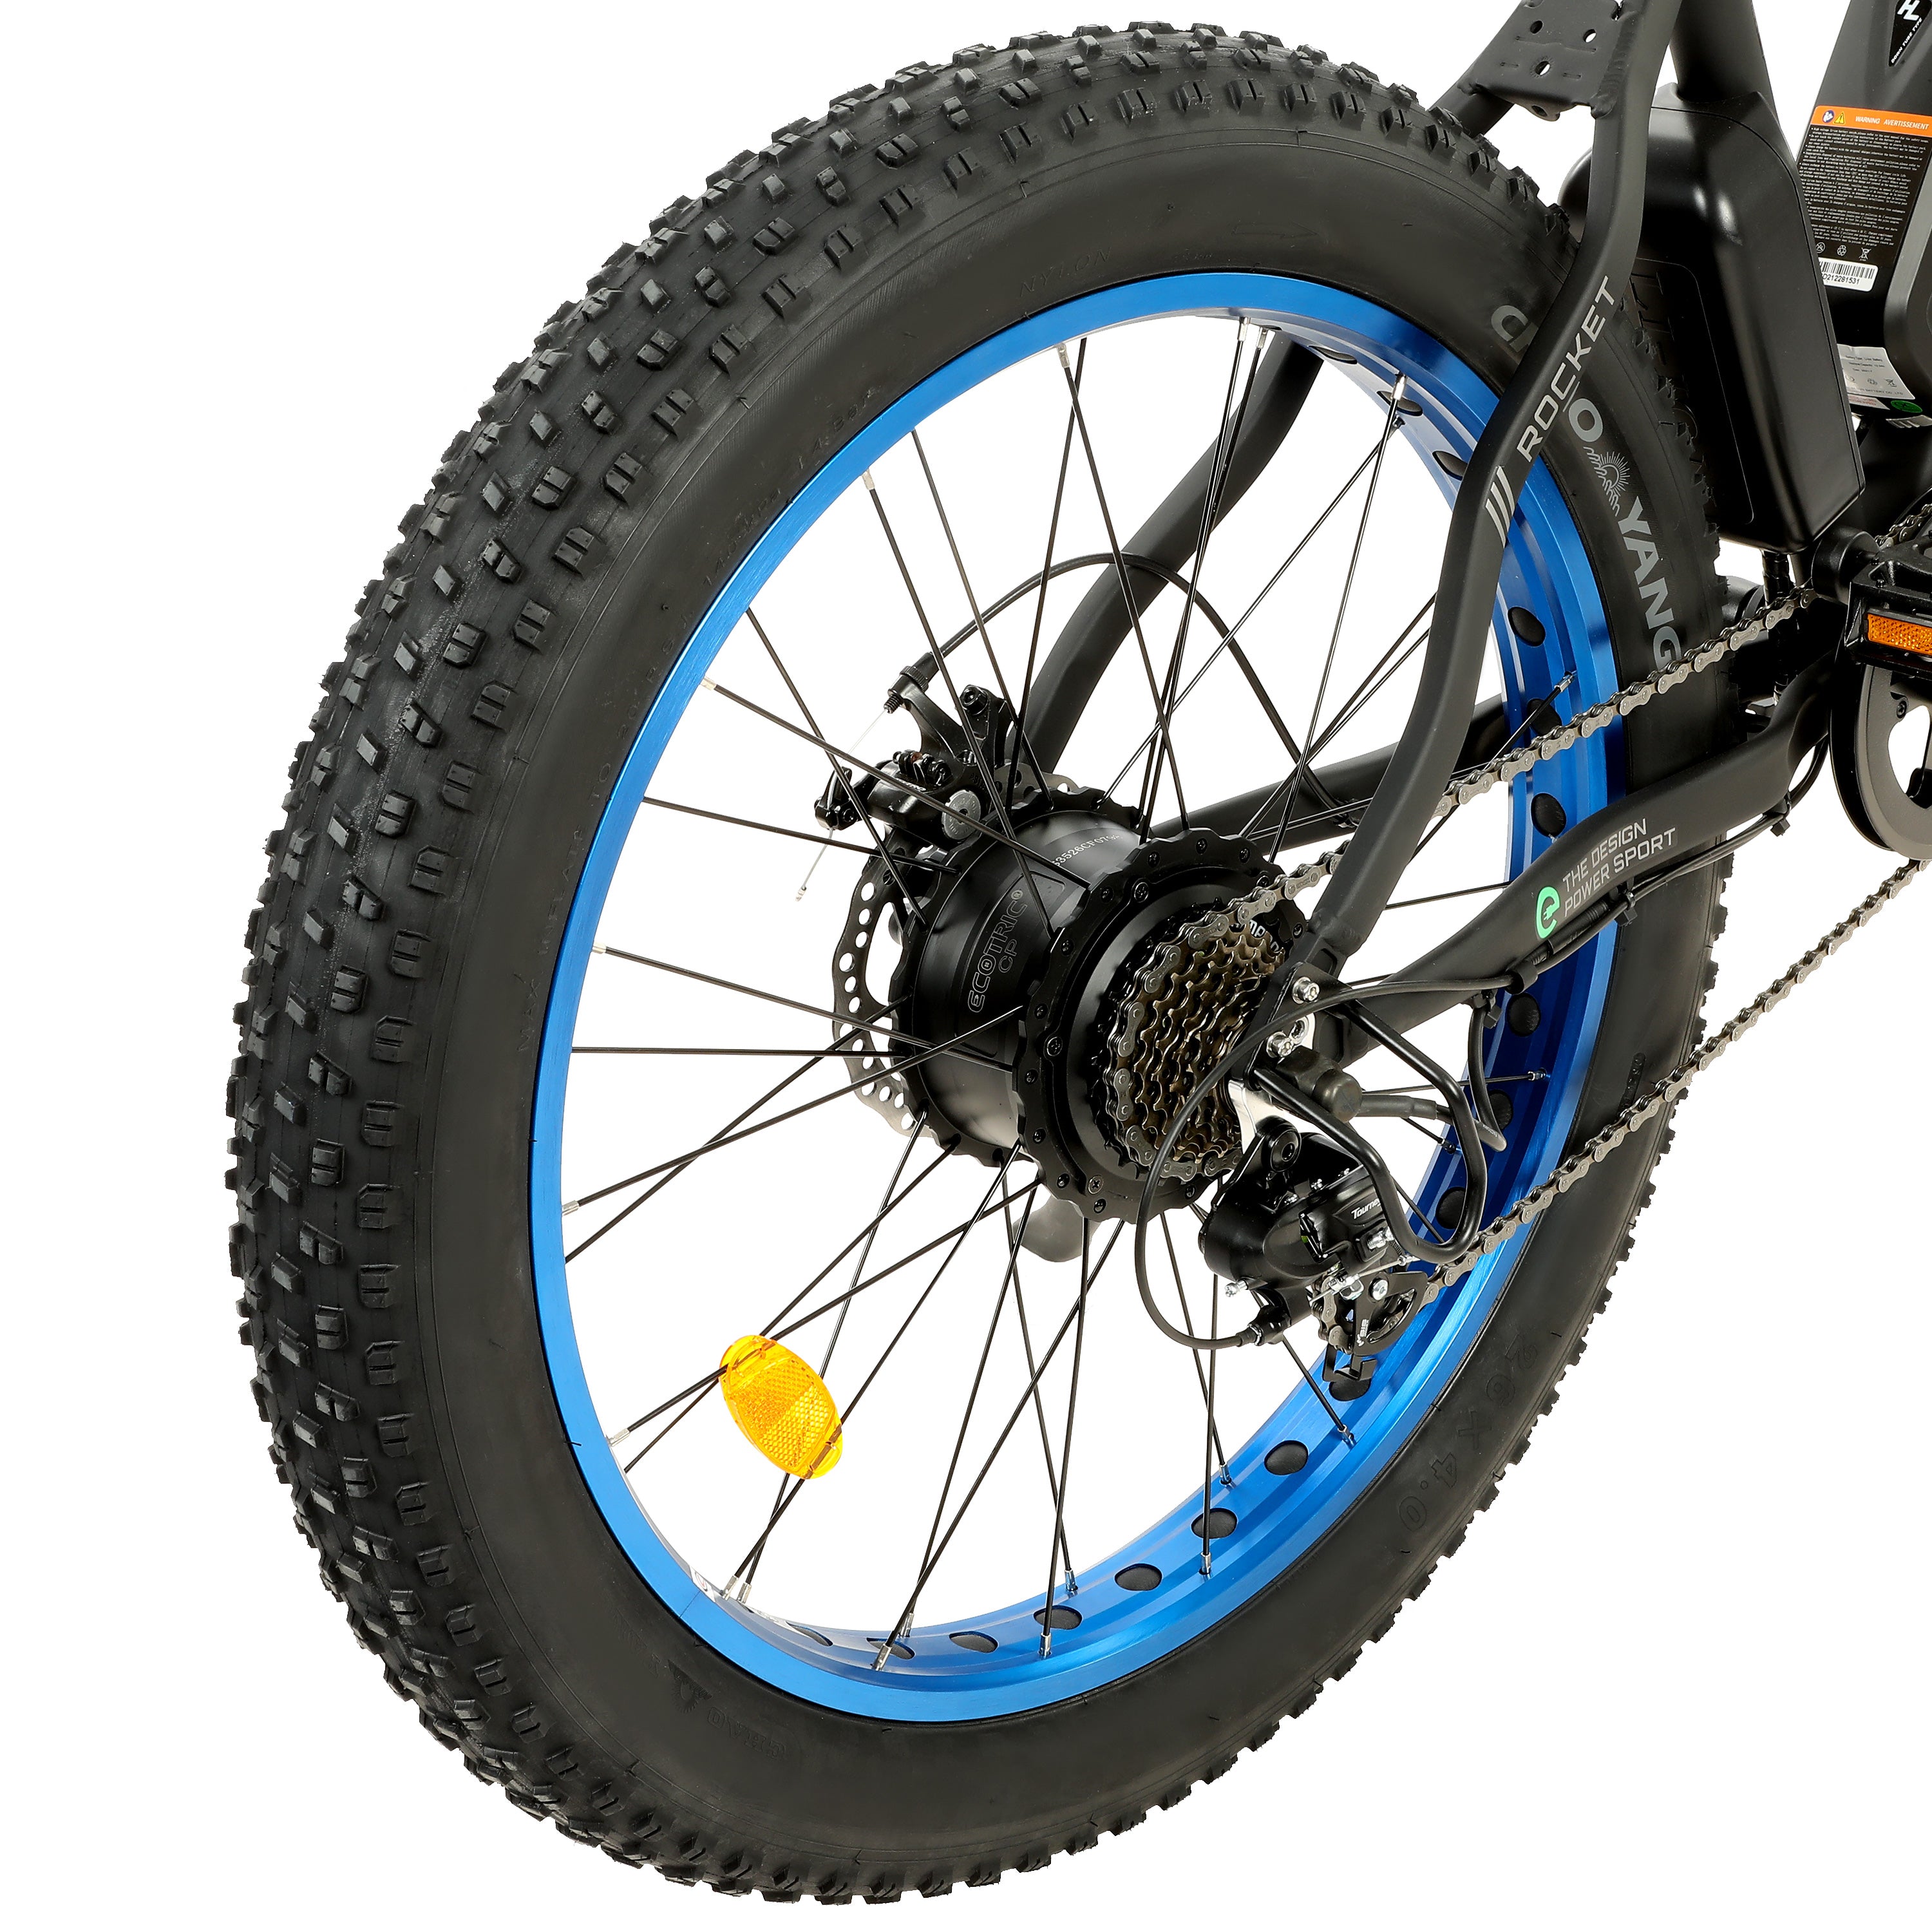 UL Certified-Ecotric Rocket Fat Tire Beach Snow Electric Bike - Blue